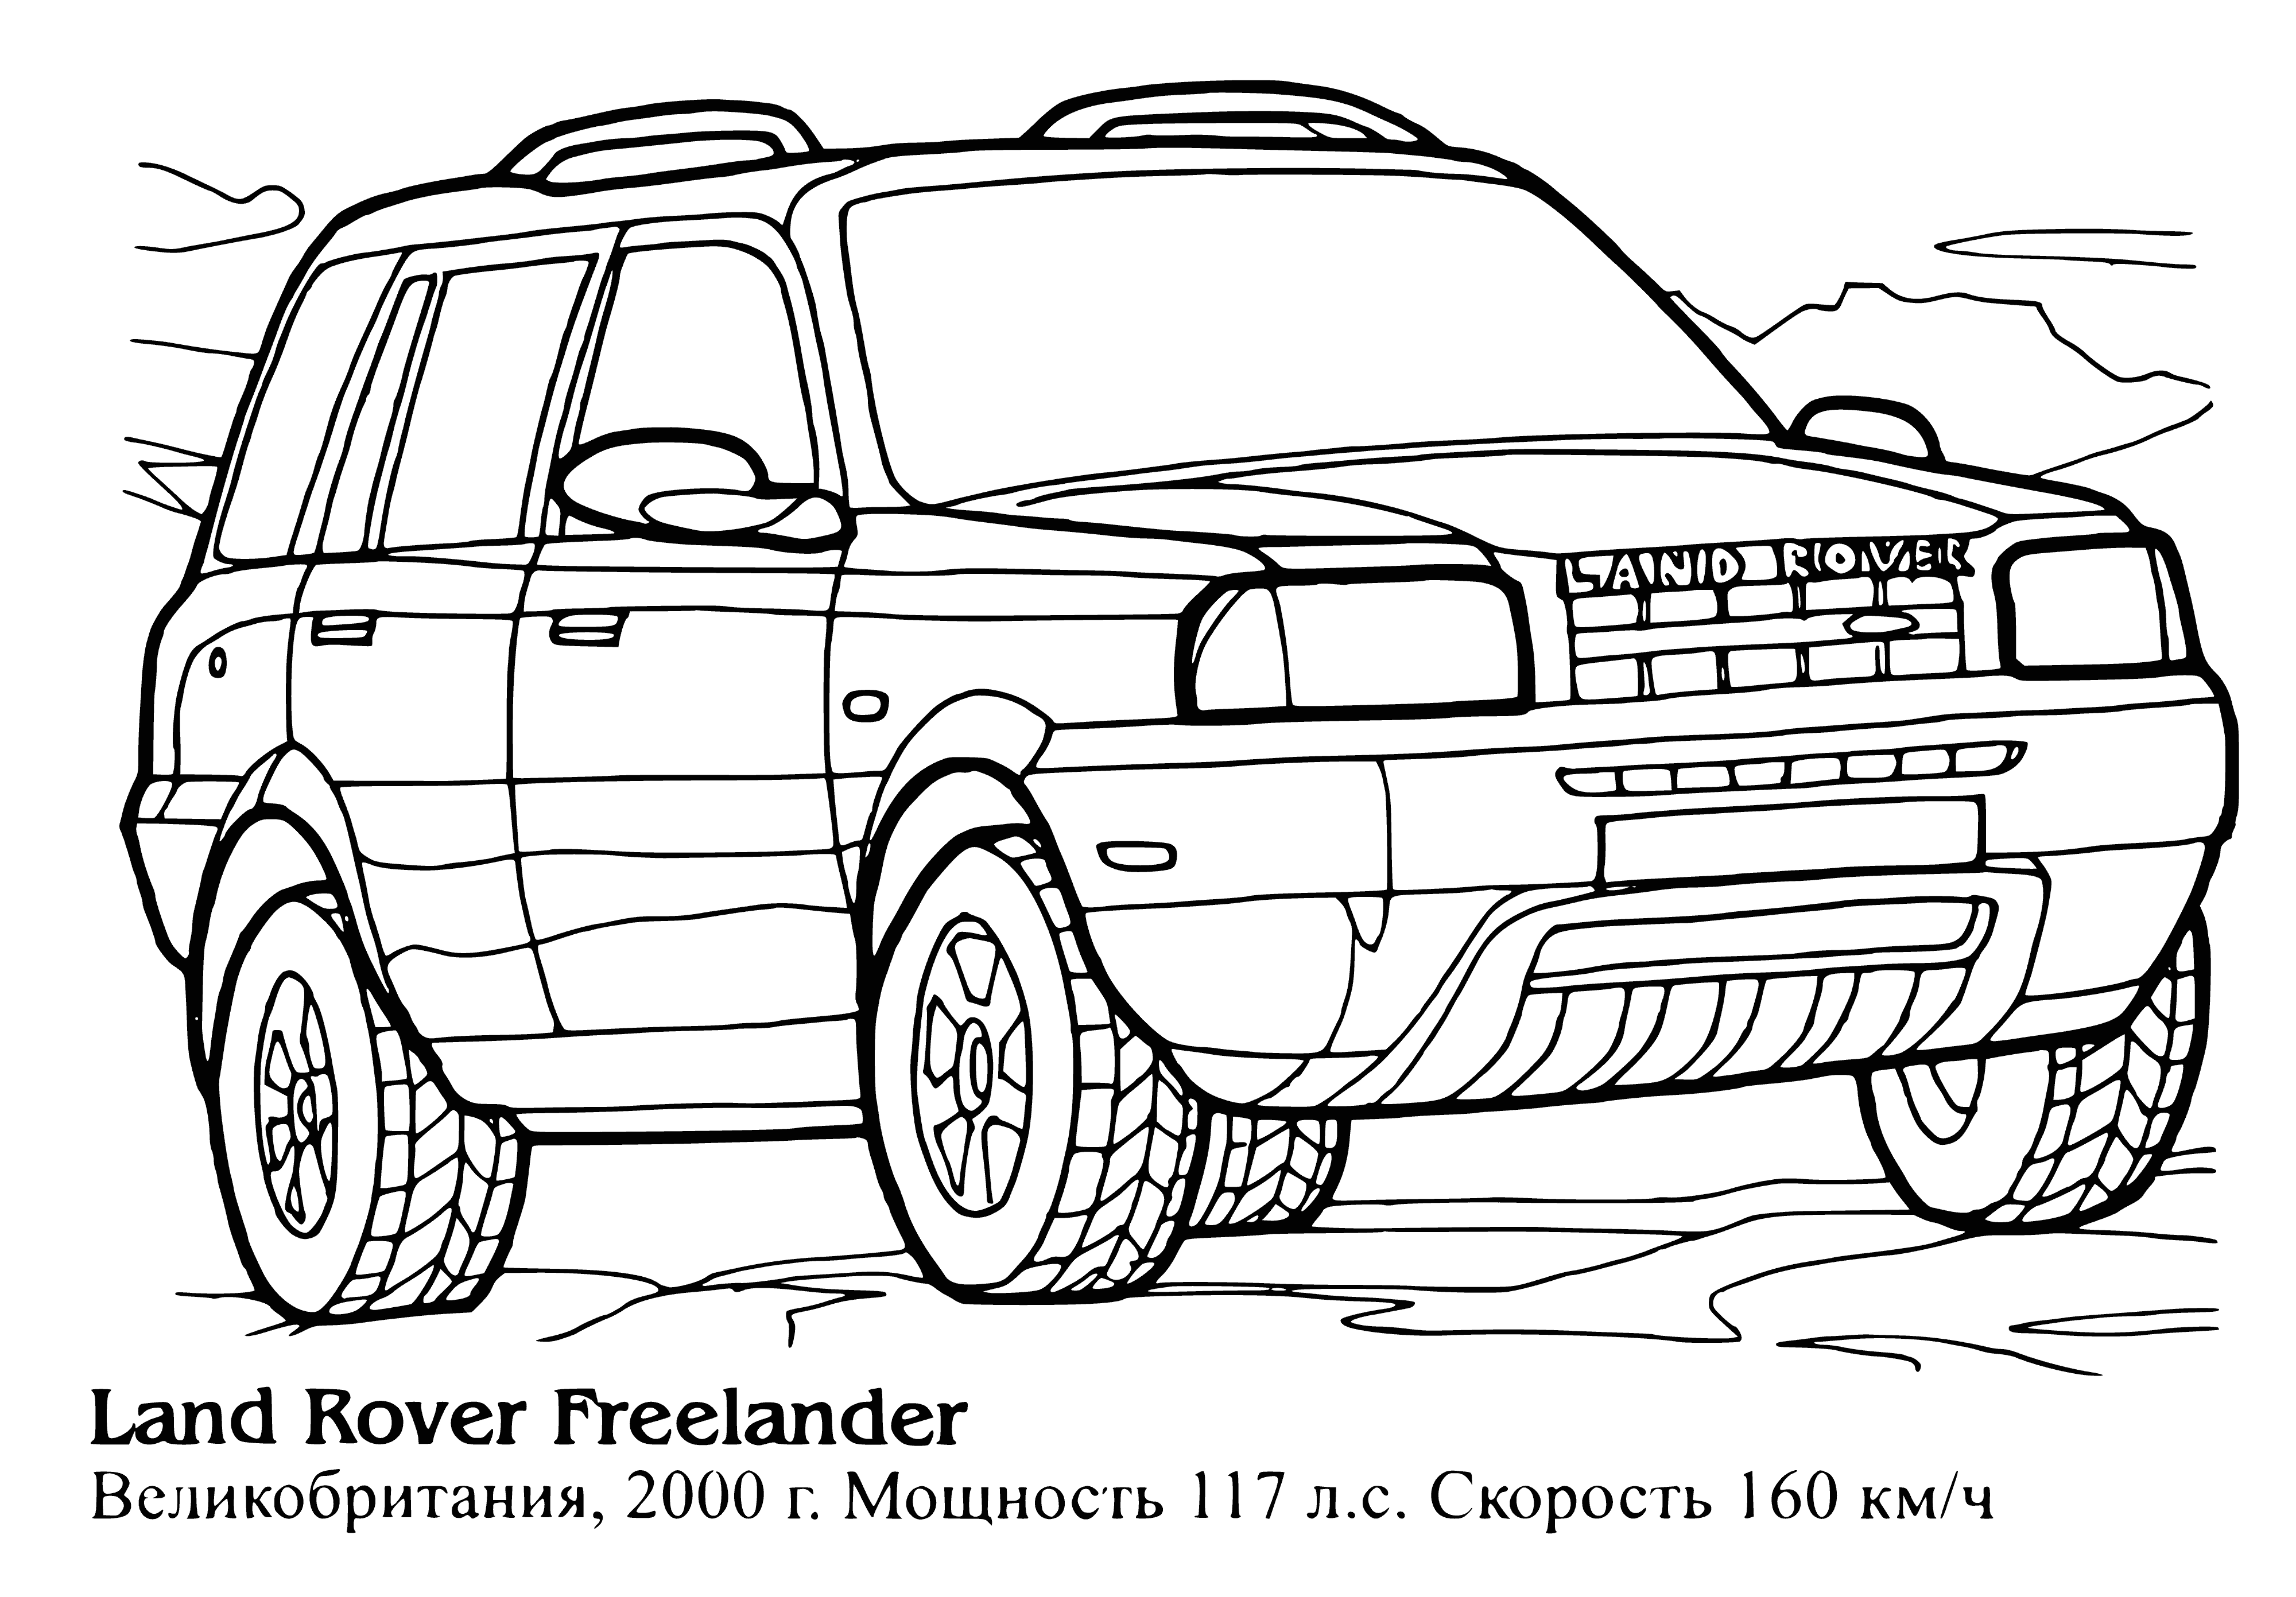 Land Rover Freelander coloring page